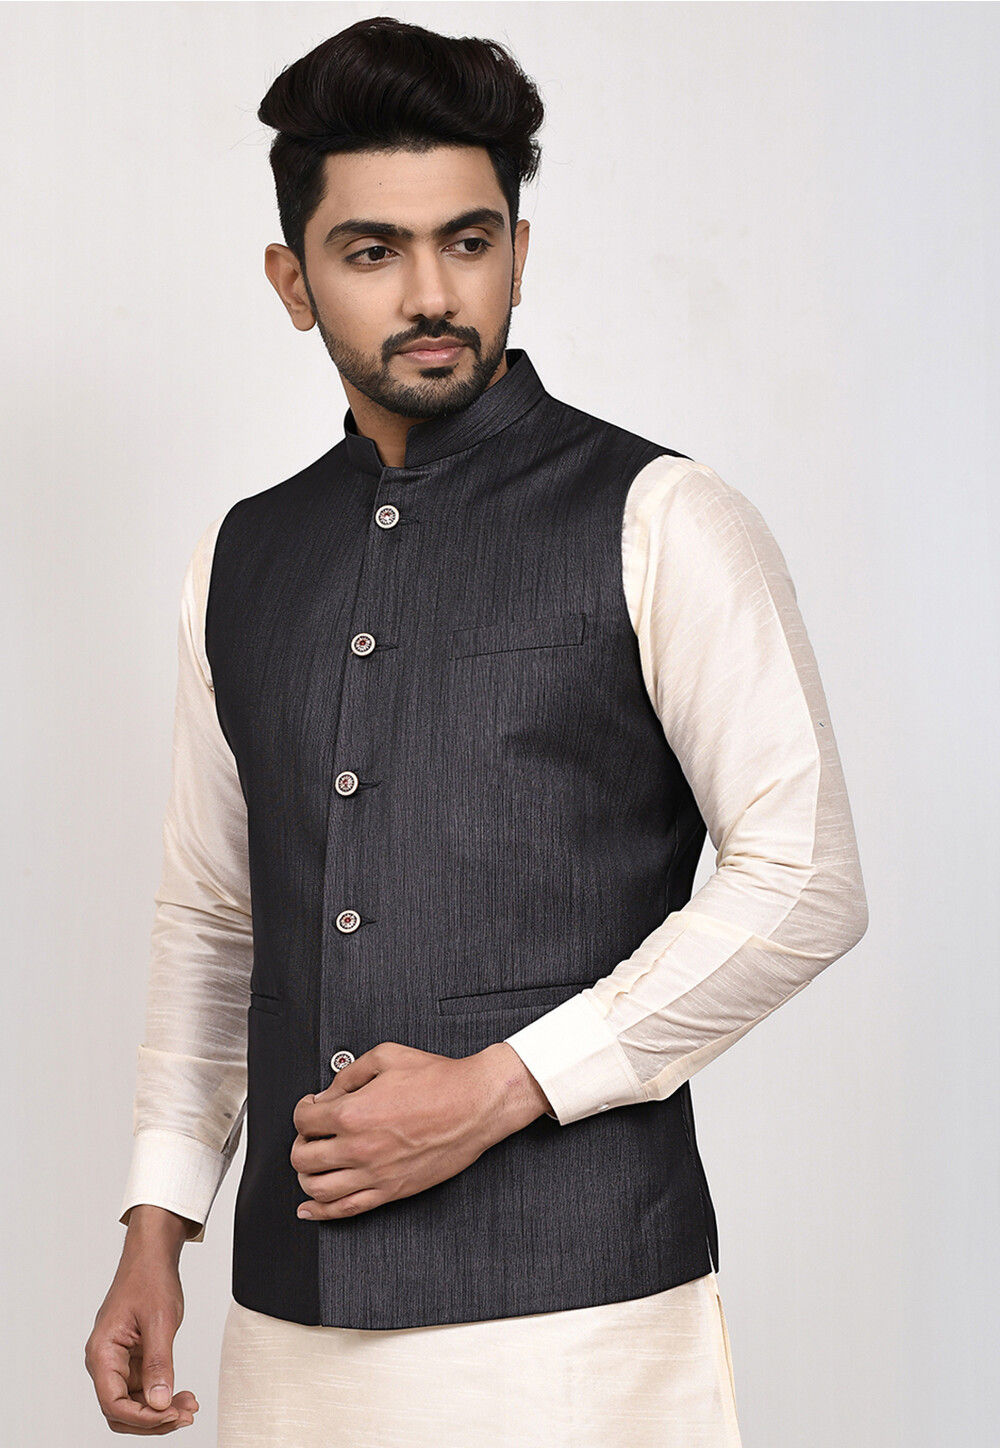 Blacksmith Black Modi Jacket for Men - Black Nehru Jacket for Men |  Blacksmith Fashion